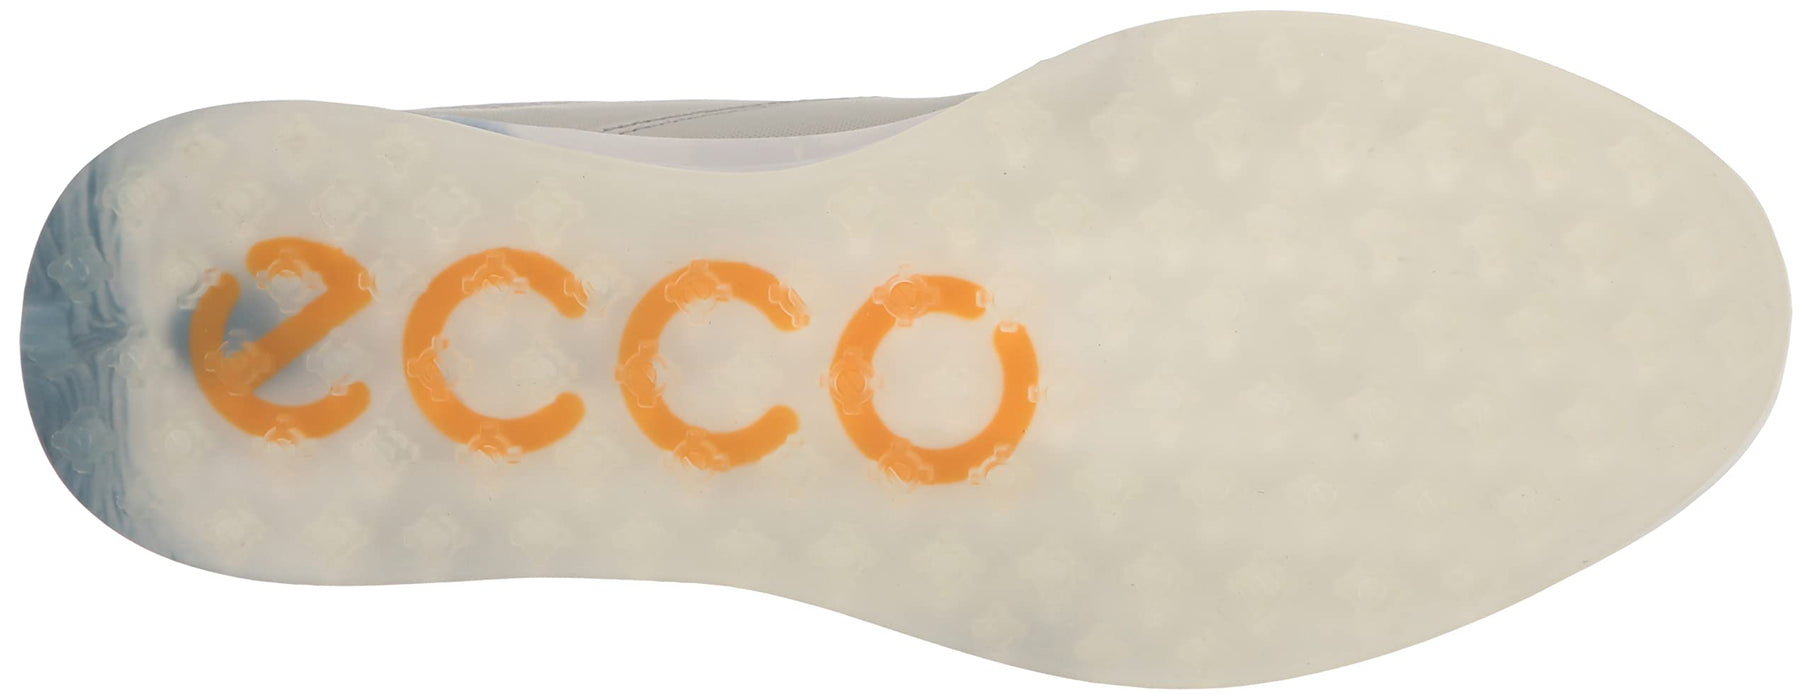 ECCO Men's S-Three Gore-Tex Waterproof Golf Shoes